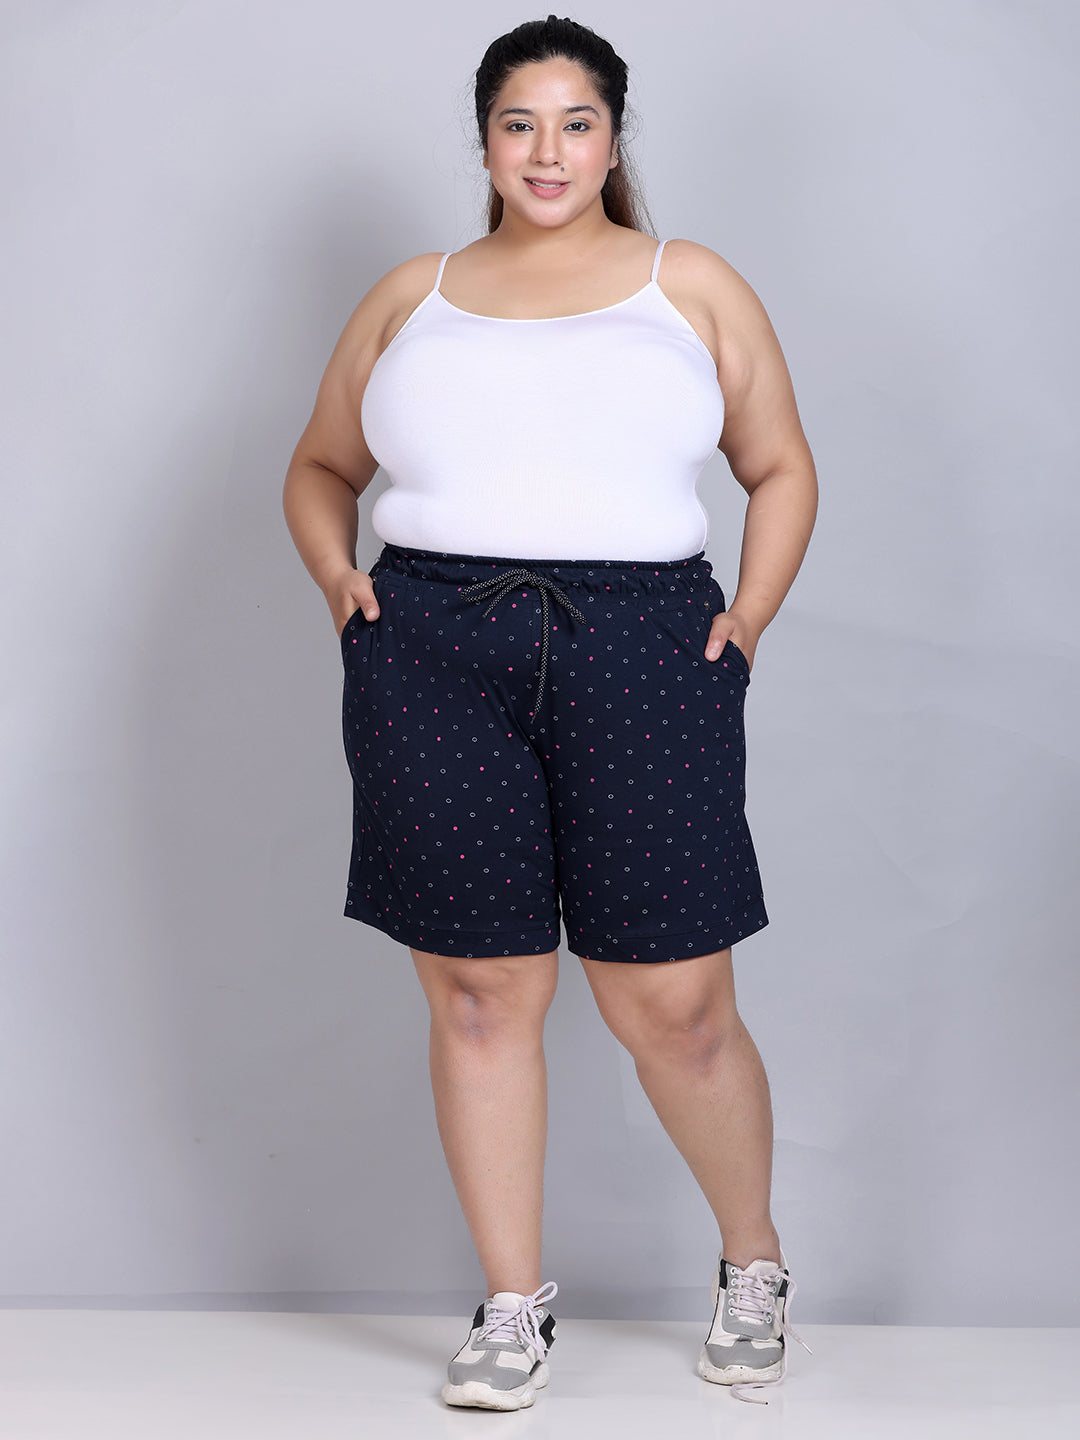 Buy Comfy Print Navy Blue Cotton Bermuda Shorts For Women Plus